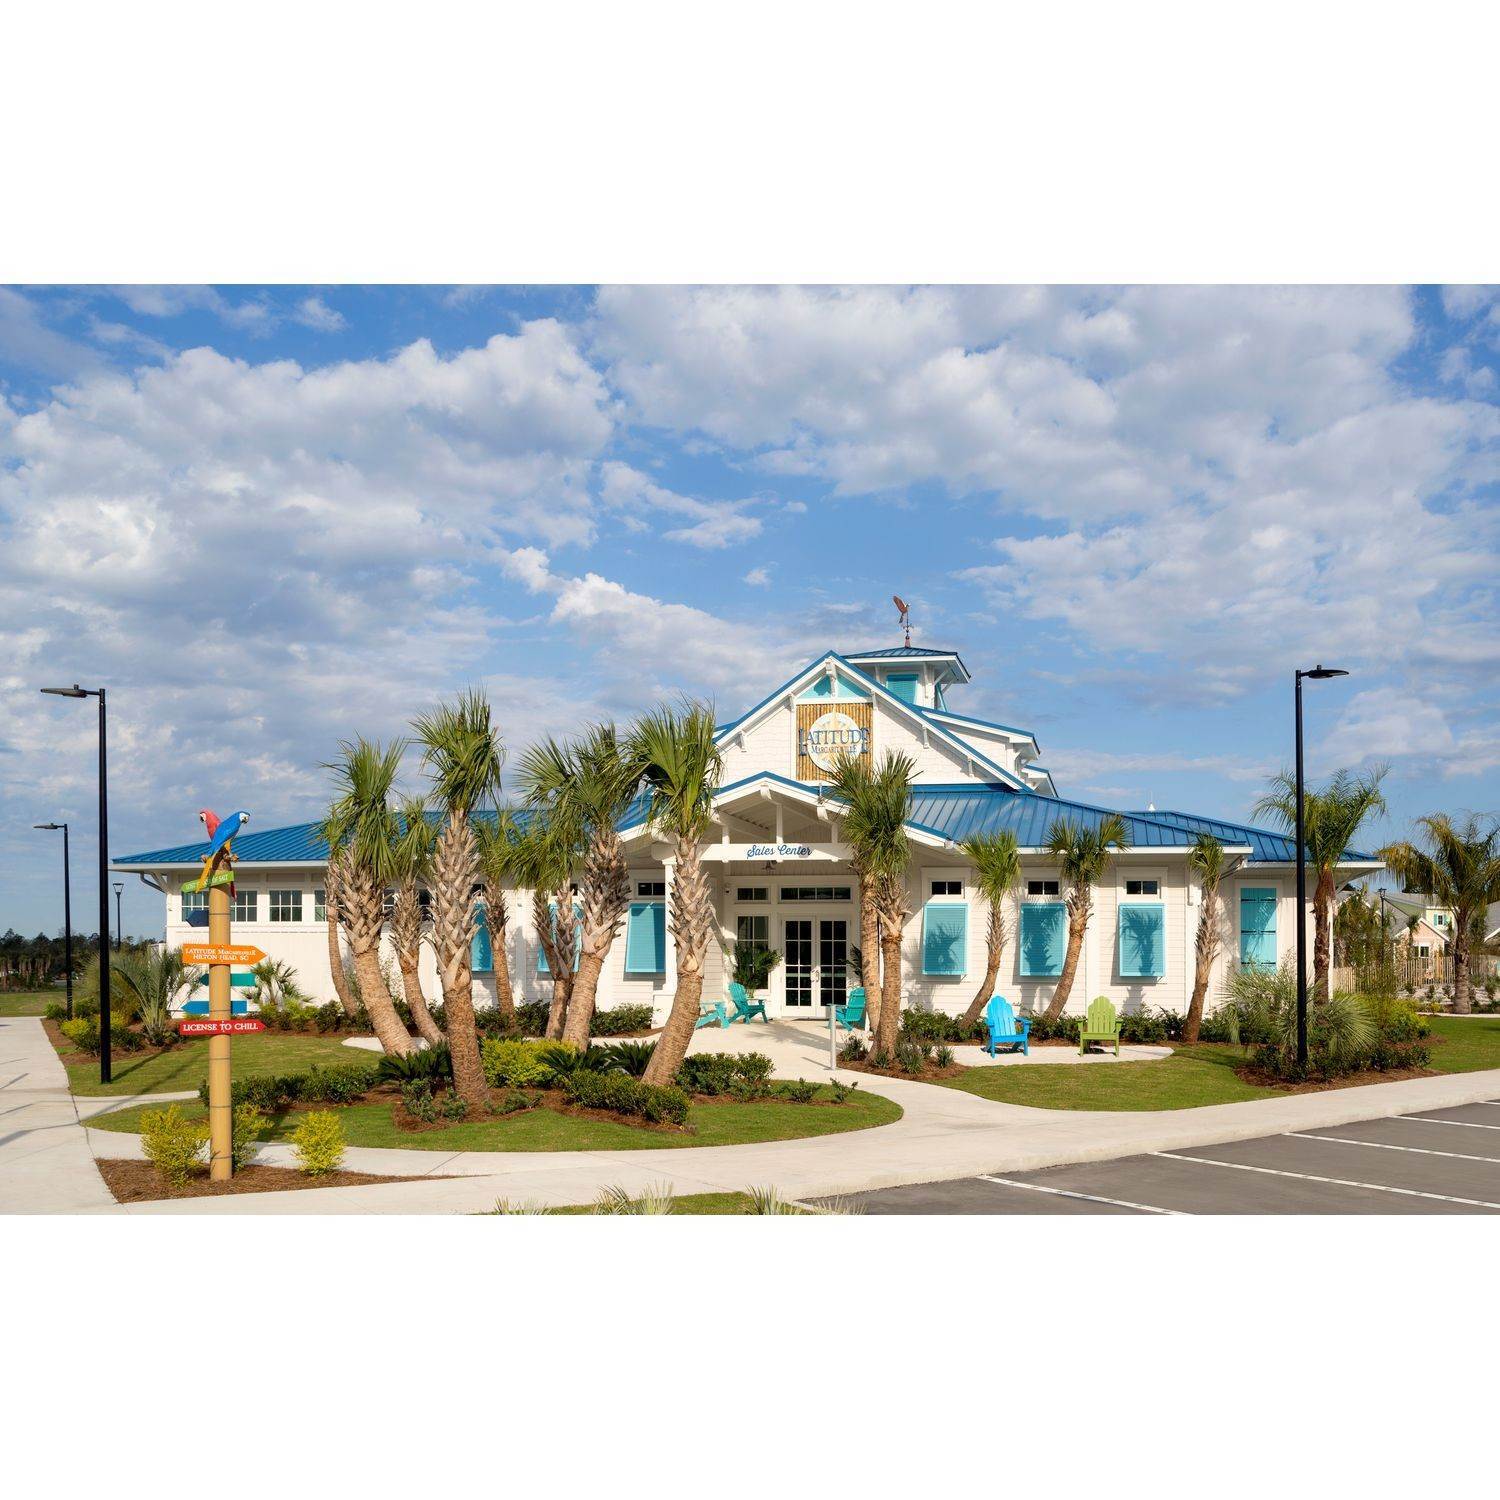 7. Latitude Margaritaville Watersound building at 9201 Highway 79, Panama City Beach, FL 32413